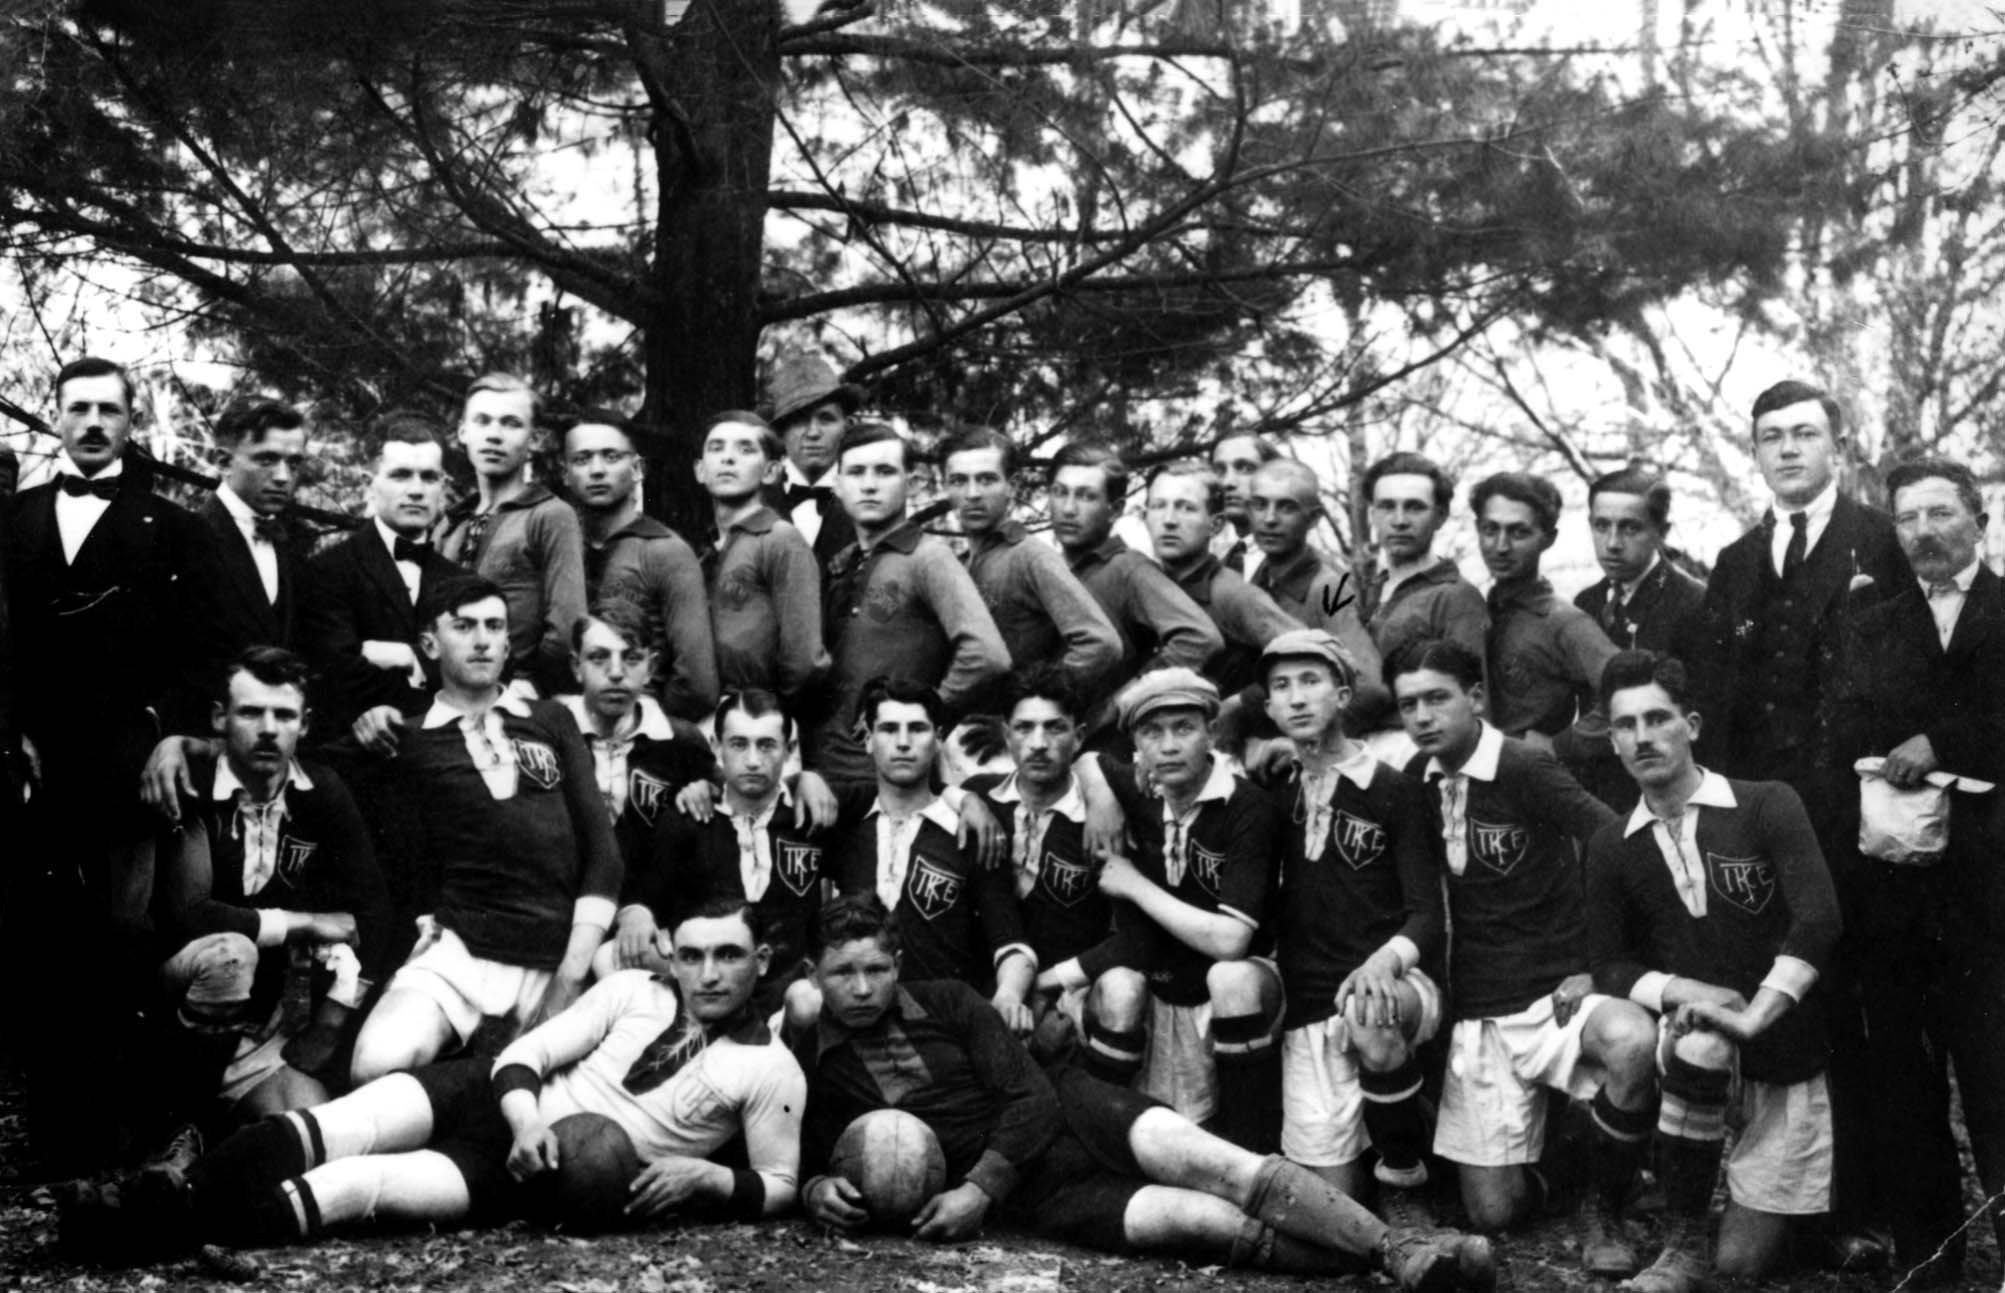 Hungary, Prewar, a football team, after winning a competition